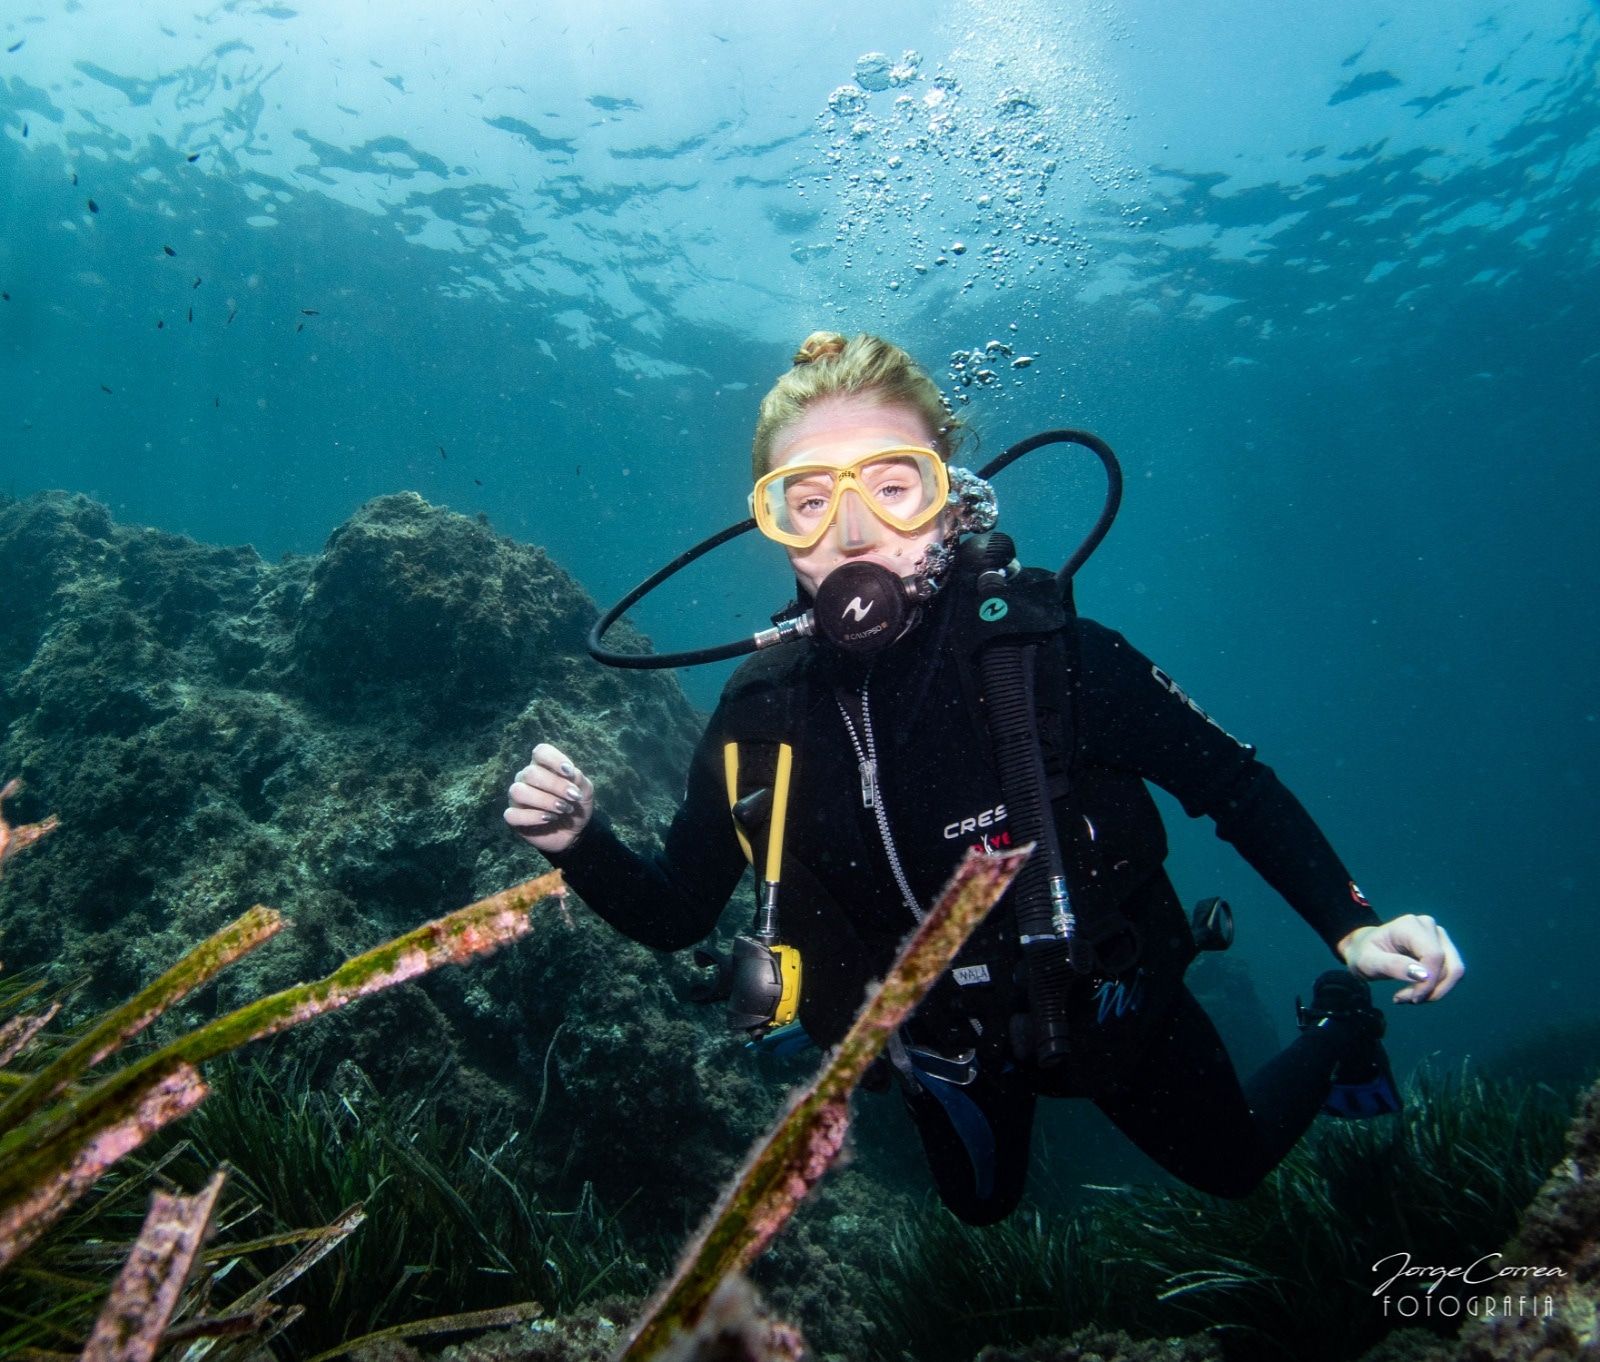 Diving experience from Santa Pola